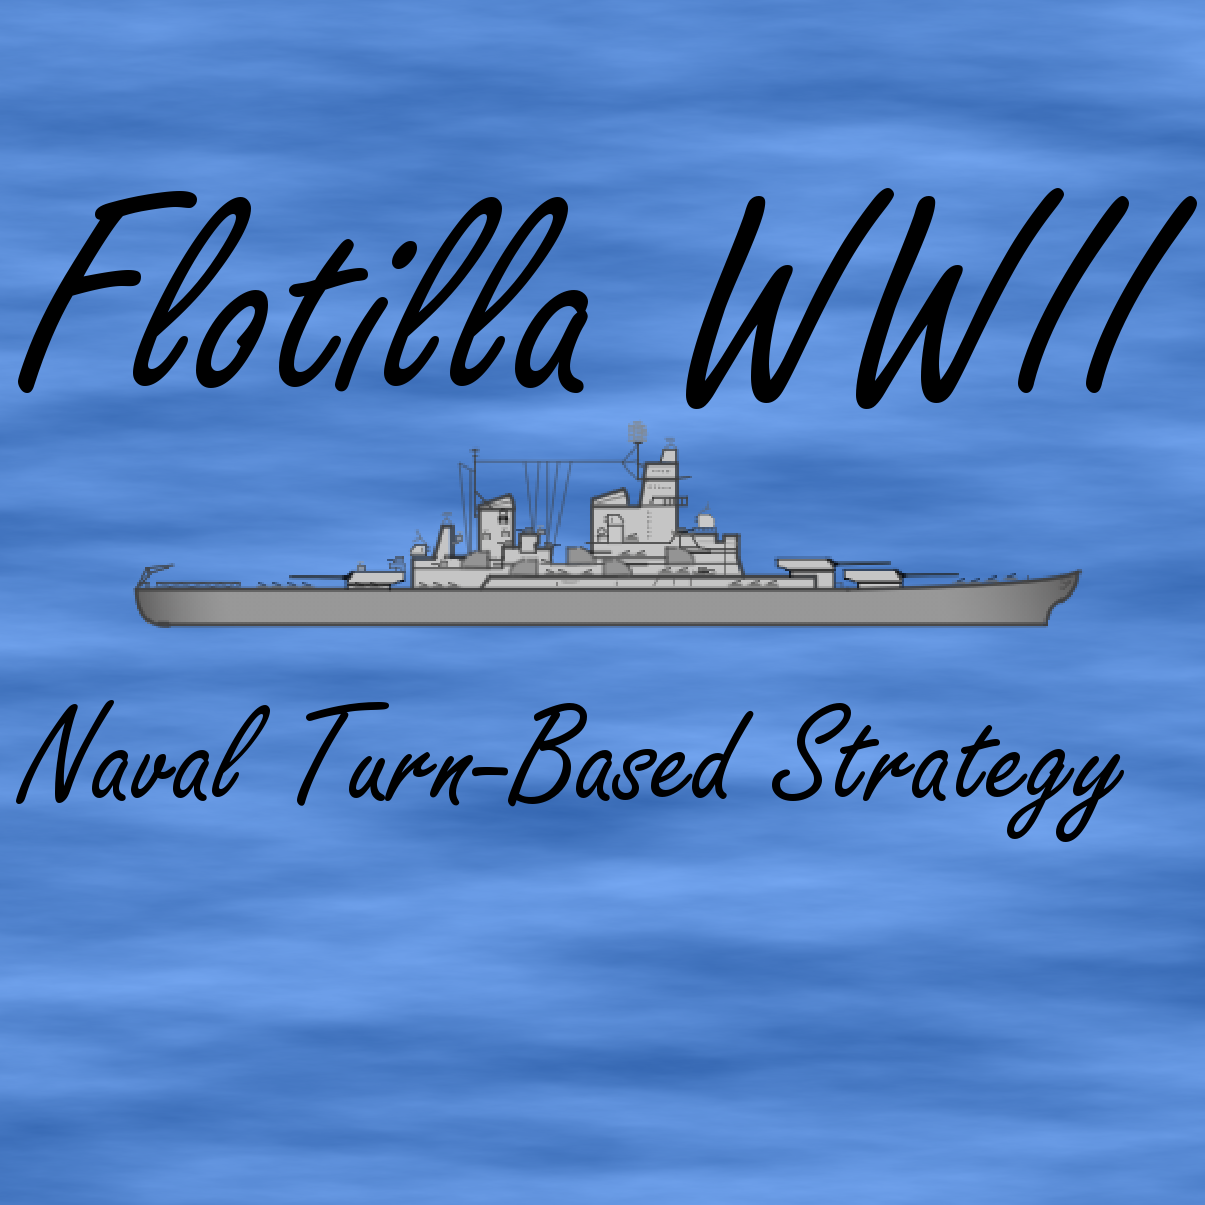 Image of Flotilla WWII